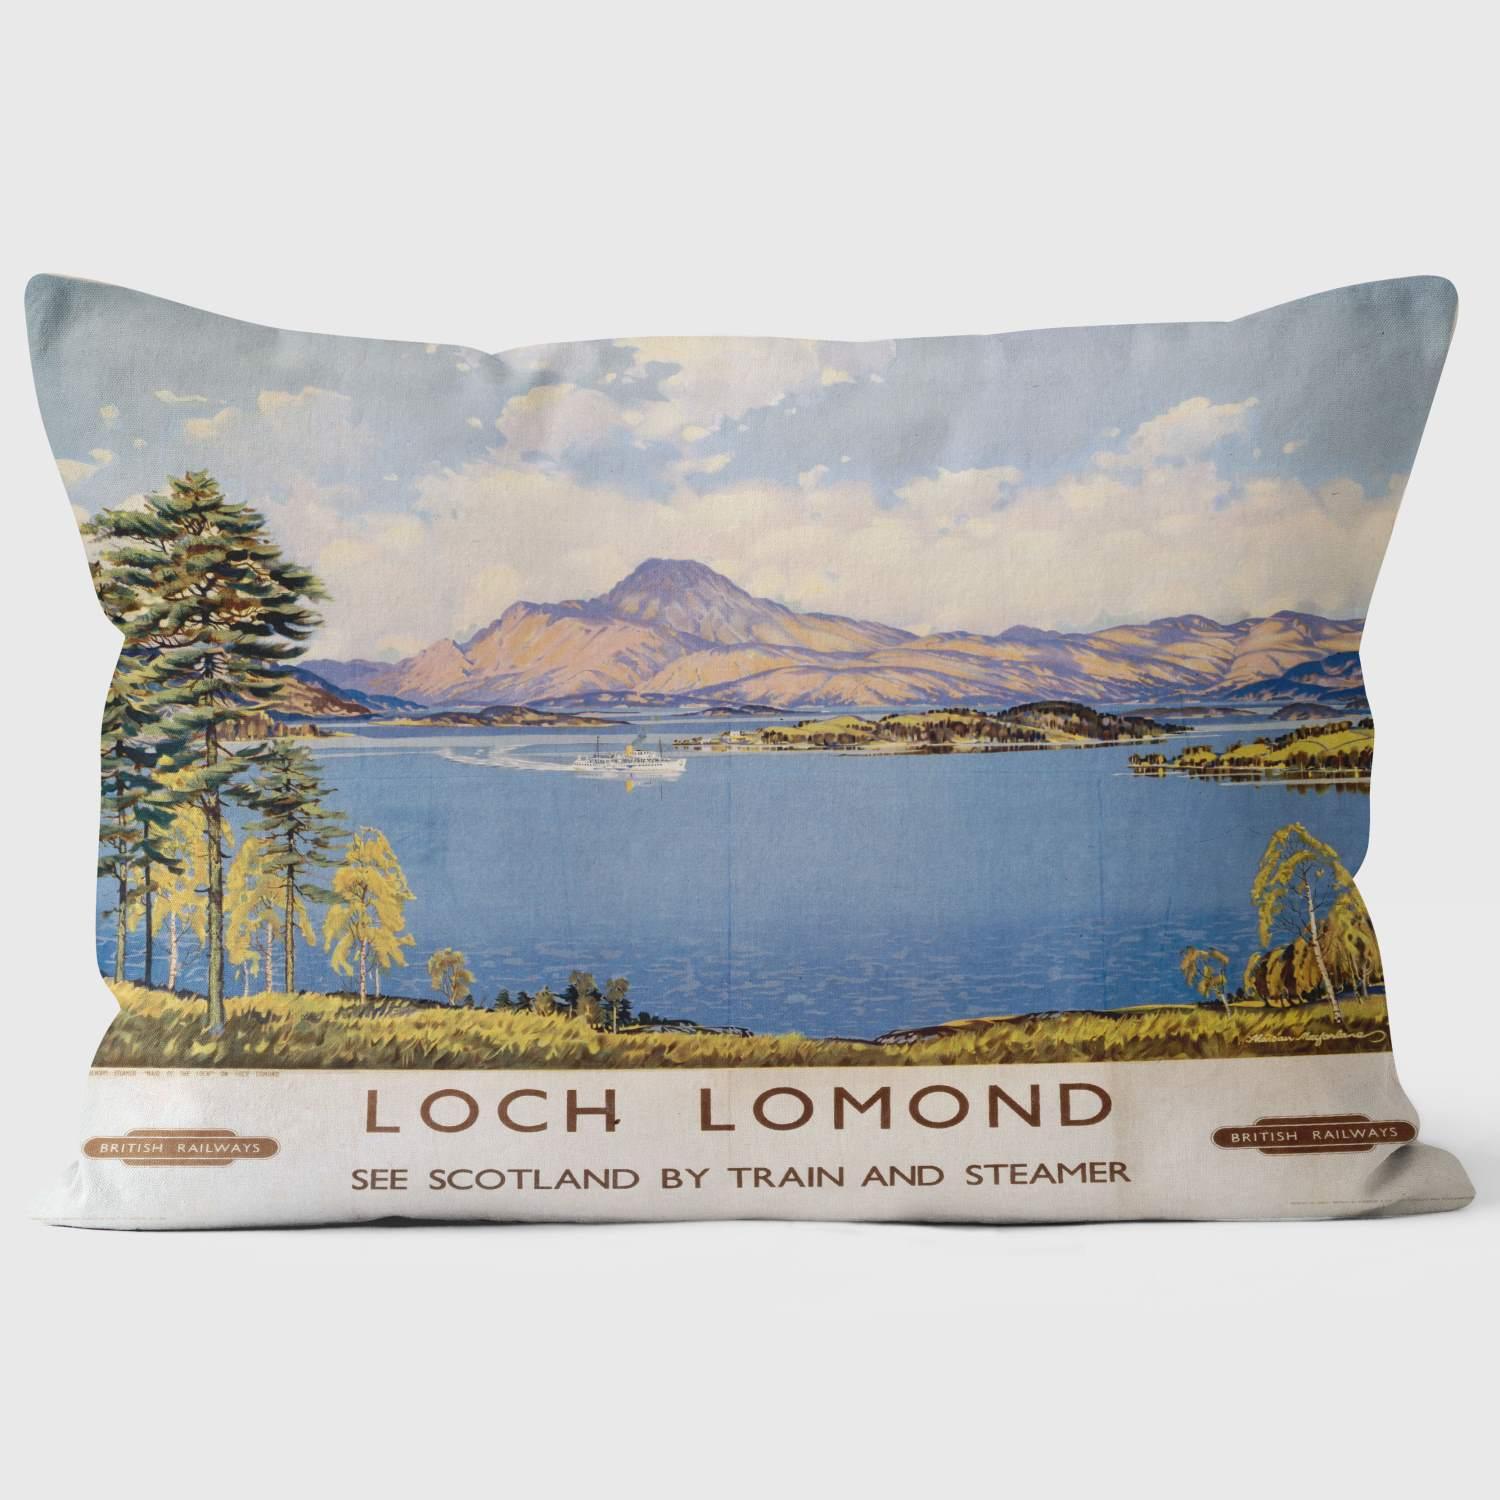 Loch Lomond See Scotland by Train and Steamer - National Railway Museum Cushion - Handmade Cushions UK - WeLoveCushions